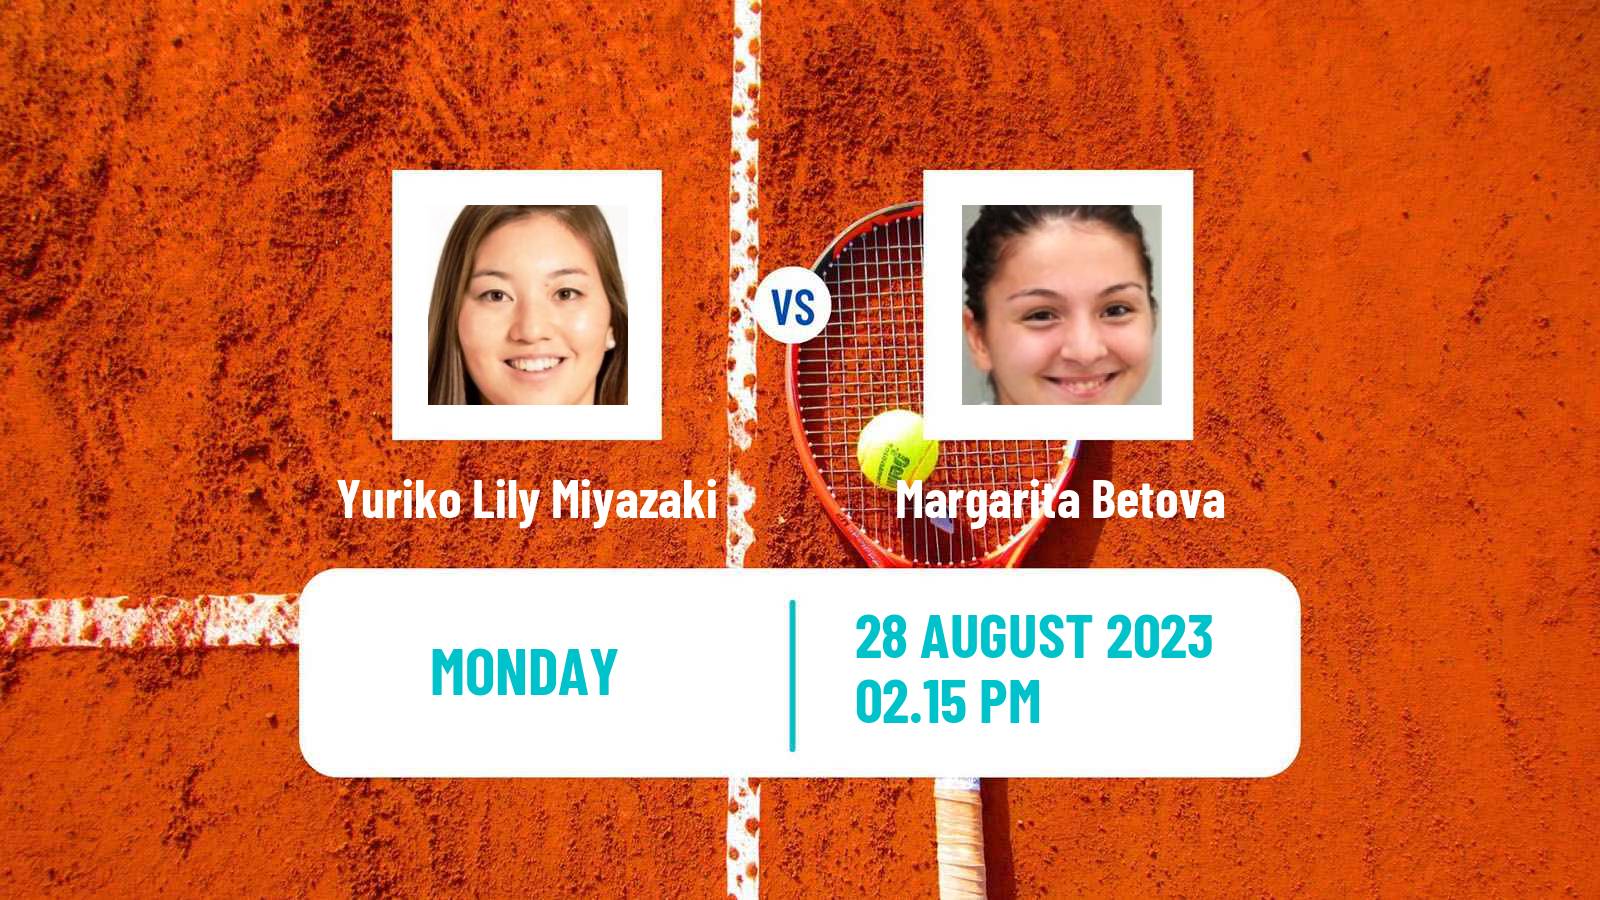 Tennis WTA US Open Yuriko Lily Miyazaki - Margarita Betova